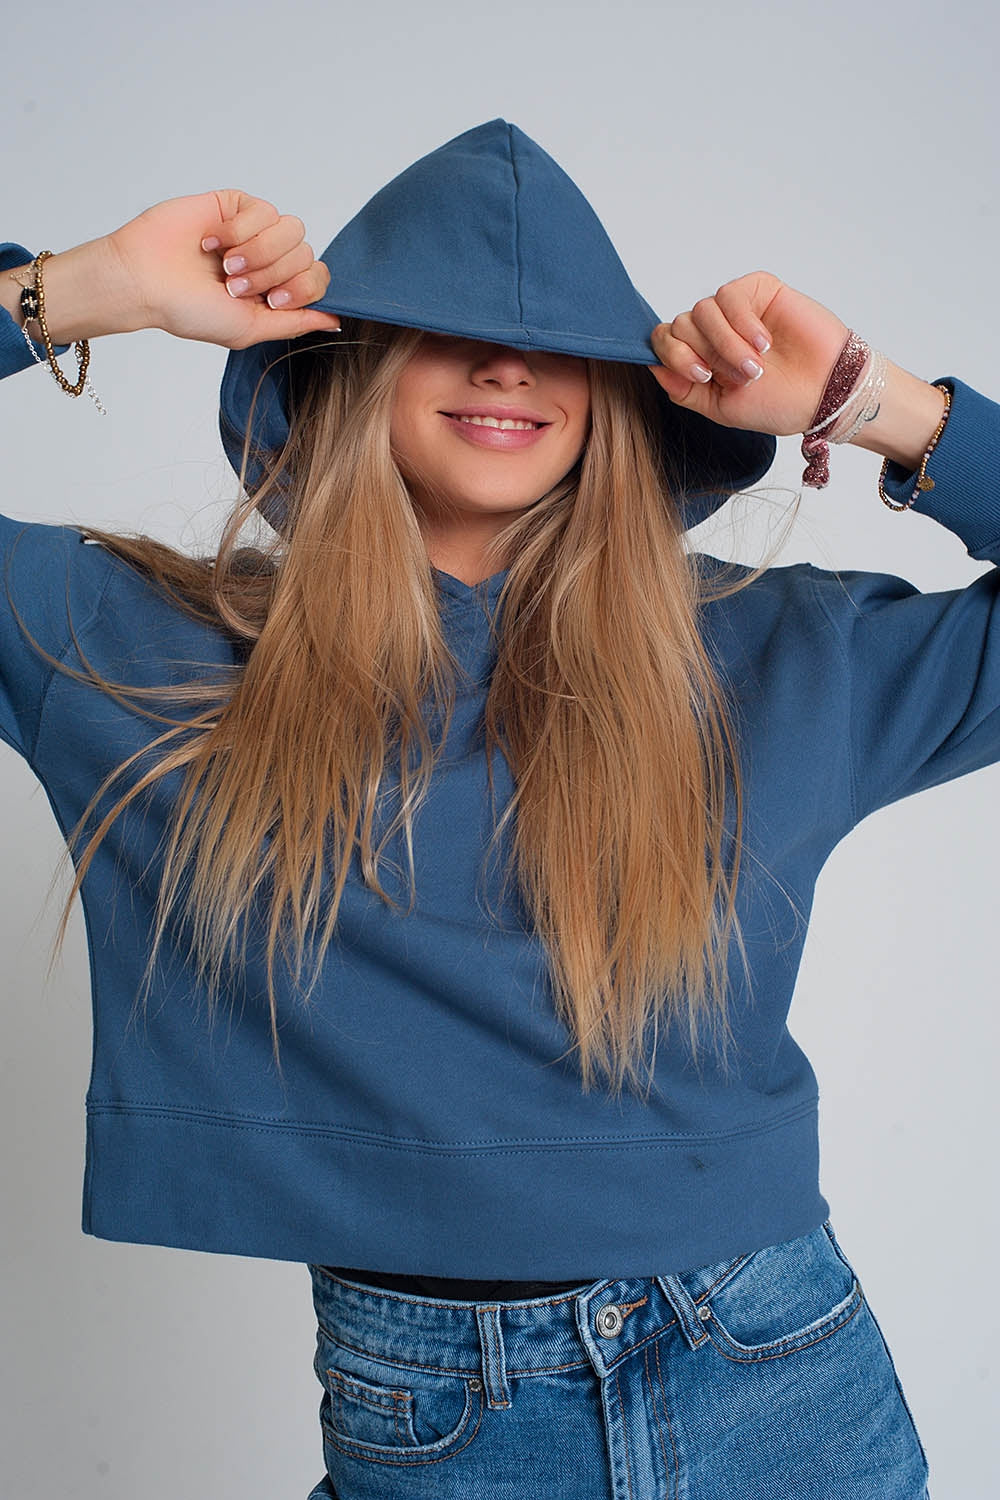 Hooded sweatshirt in blue